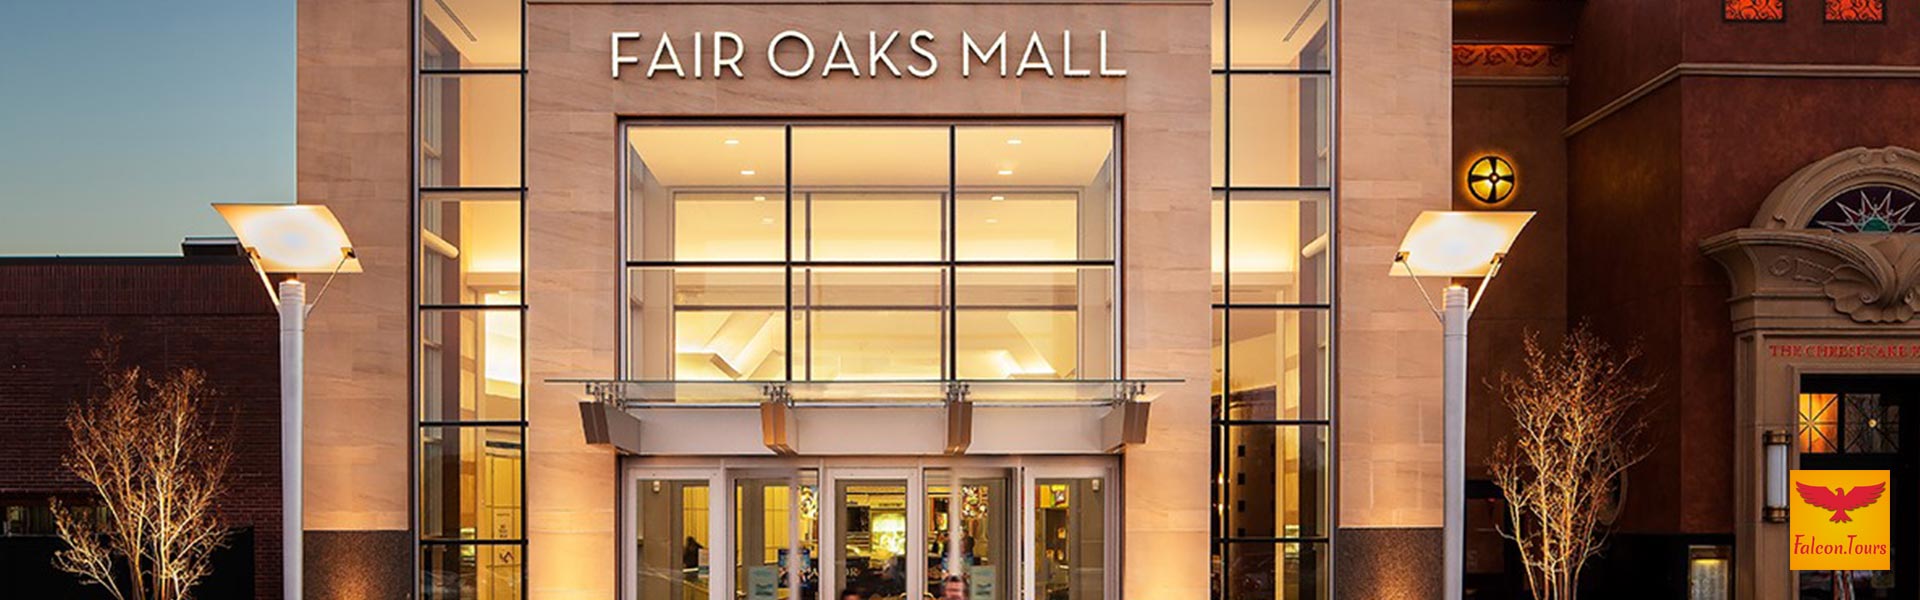 Falcon Cab & Falcon Tours - Call @ (703) 445-4450 - Fair Oaks Shopping Mall